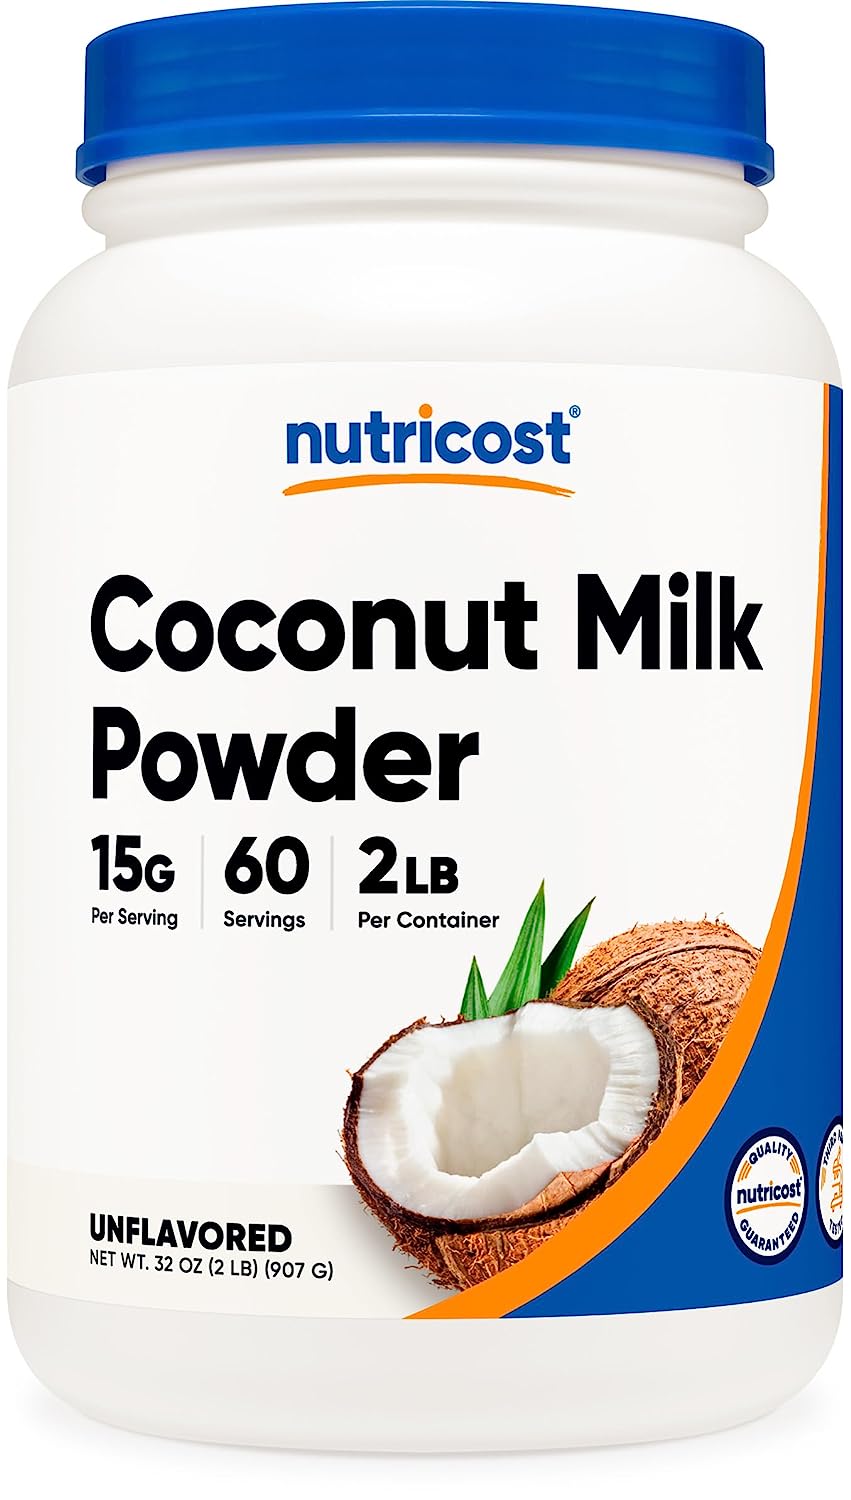 Nutricost Coconut Milk Powder 2LBS